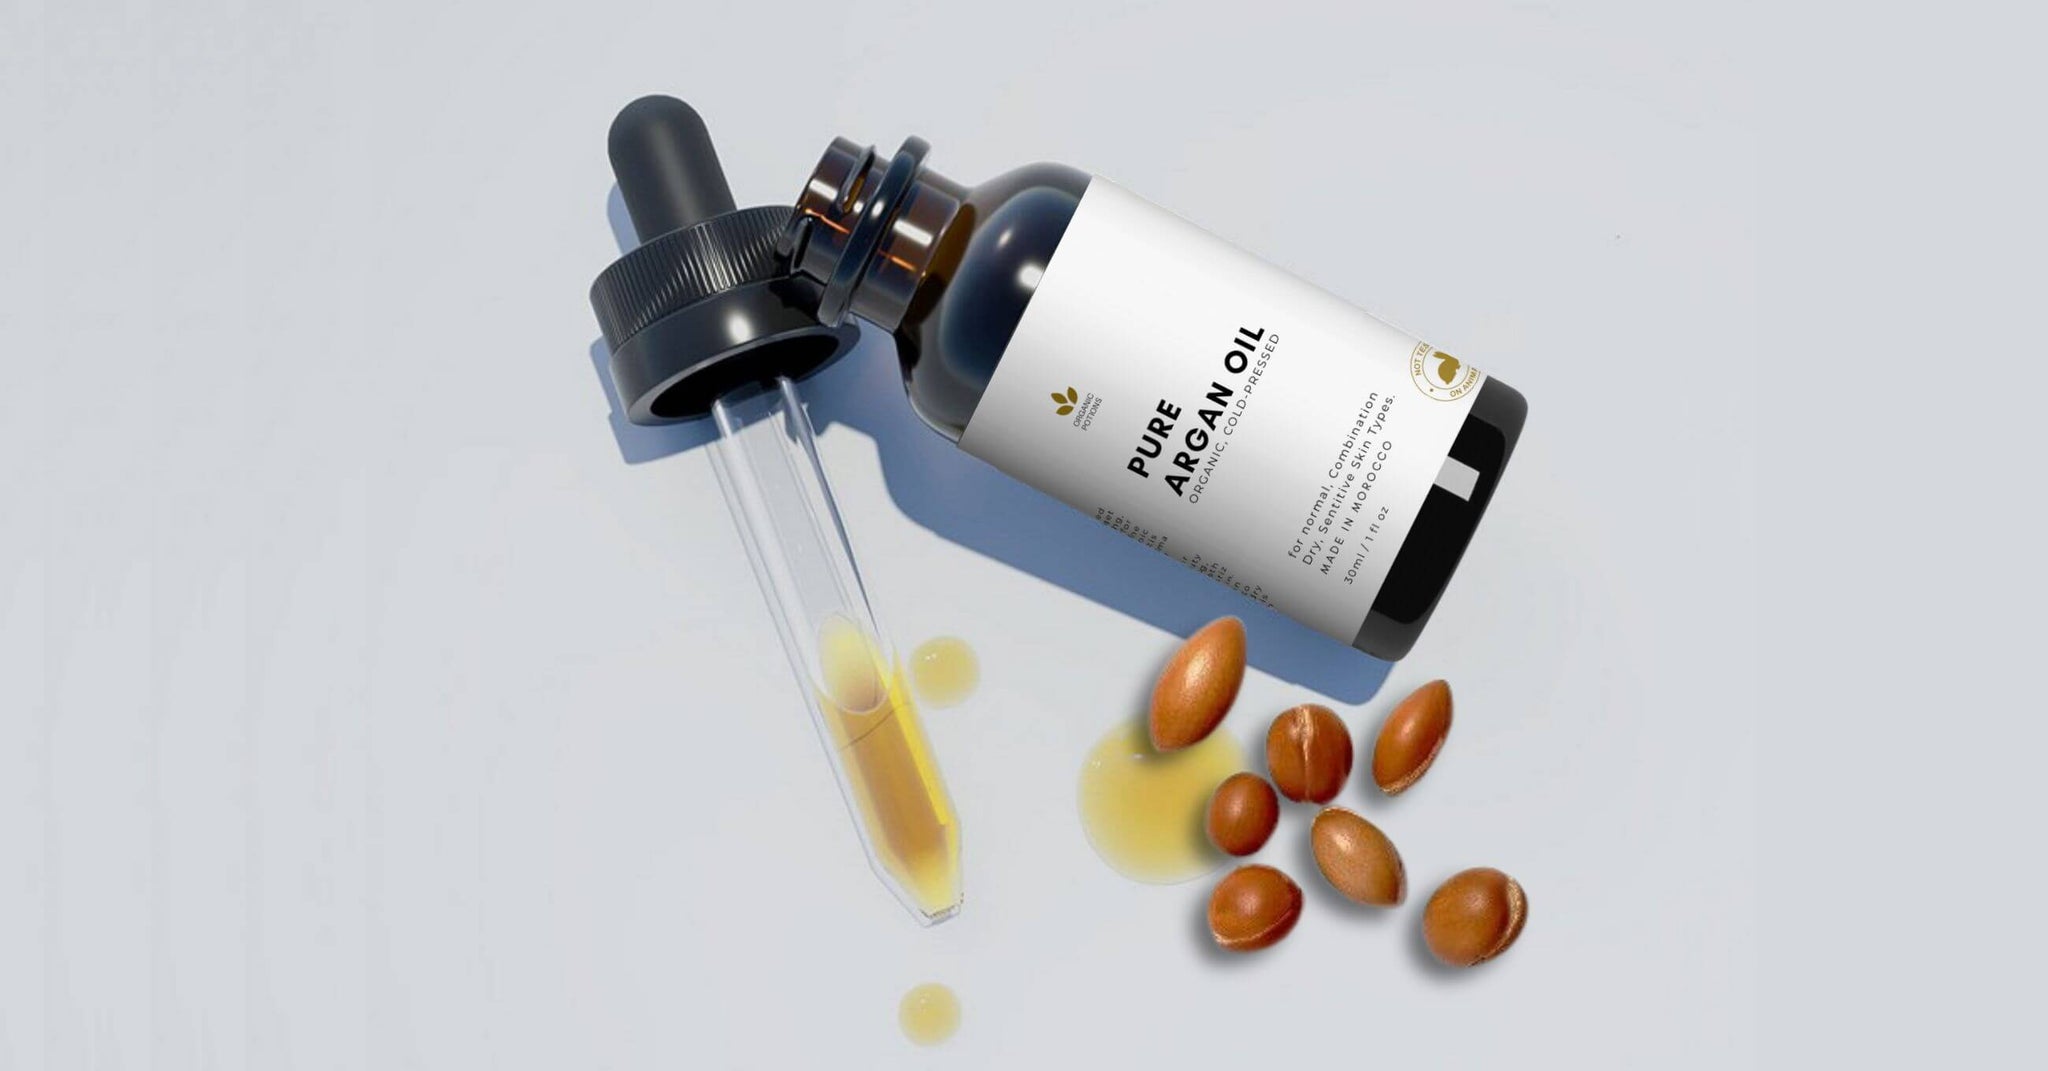 Argan oil for eczema-prone skin